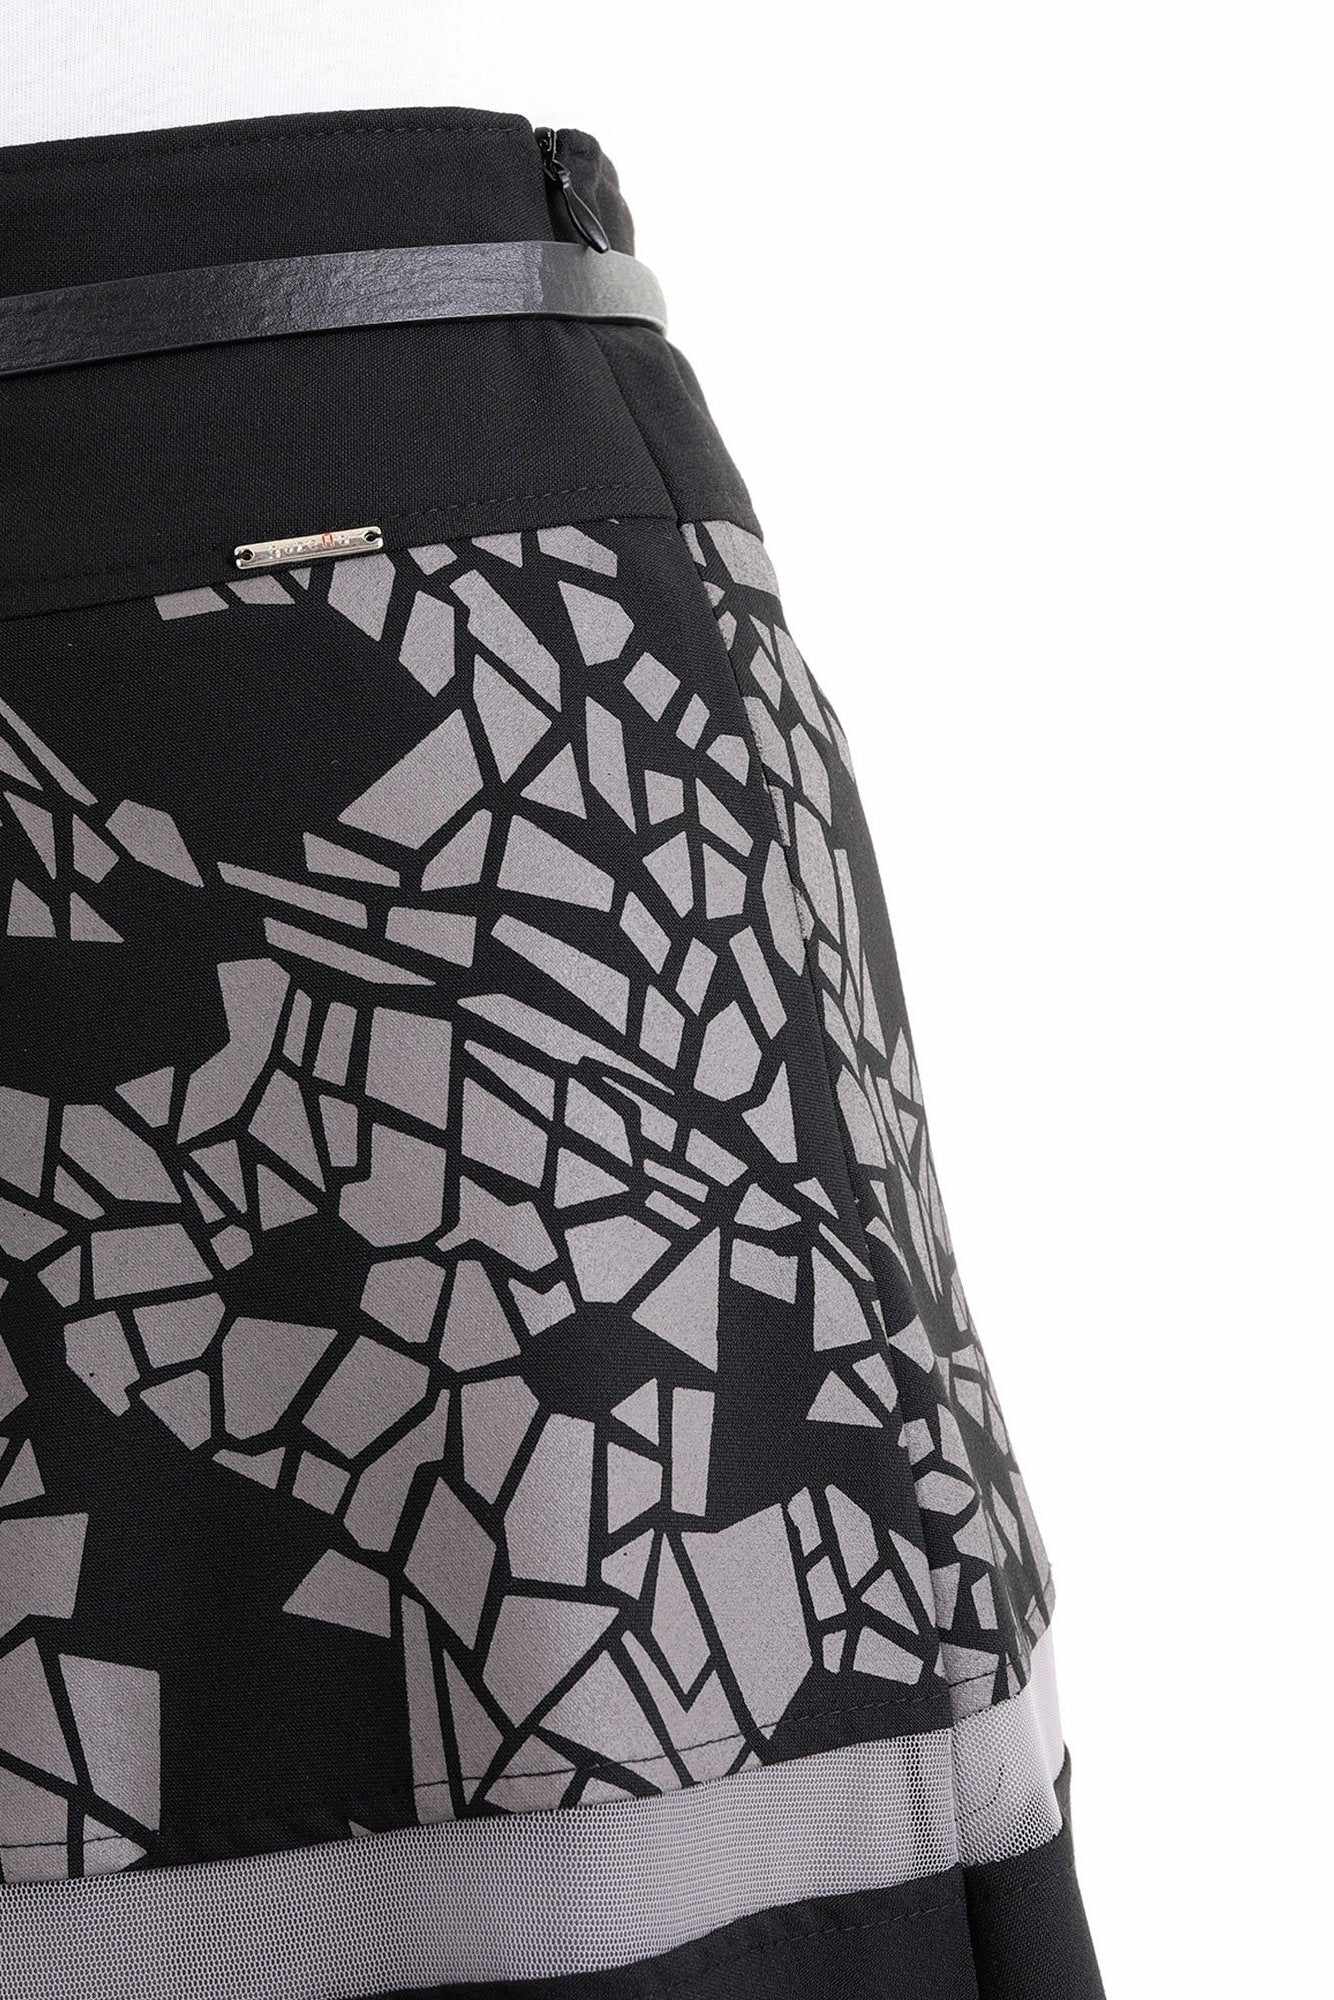 Guzella Women’s High Waist A-Line Pleated Woven Midi Skirt with Belt Loops (Black) Guzella